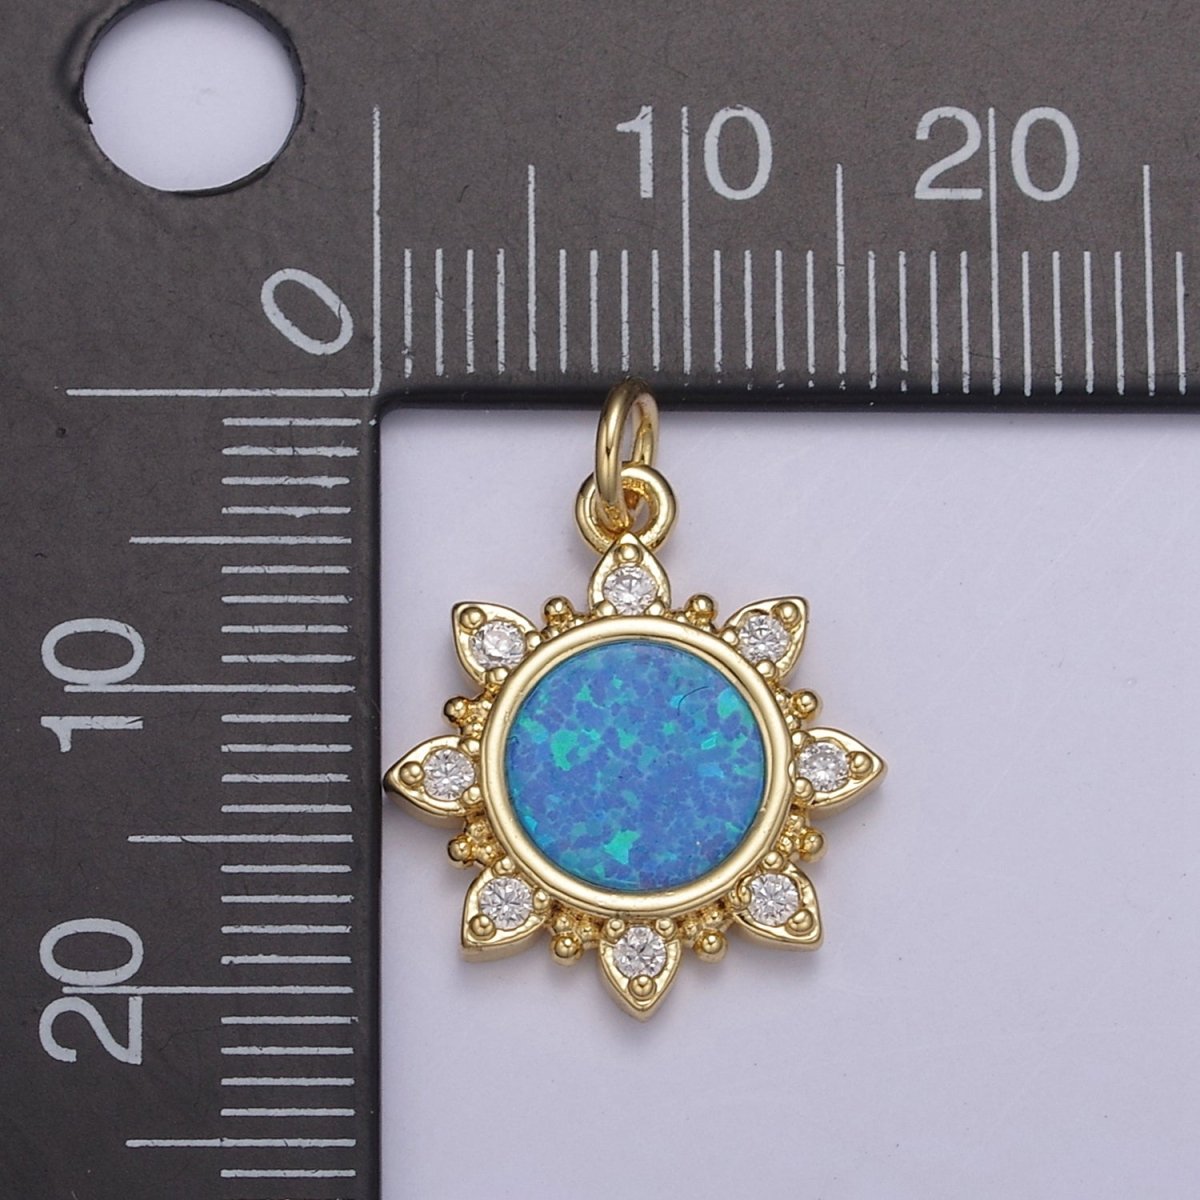 Dainty Opal Sun Charm Clear Pink Blue Opal Celestial Jewelry Inspired N-668 - N-670 - DLUXCA